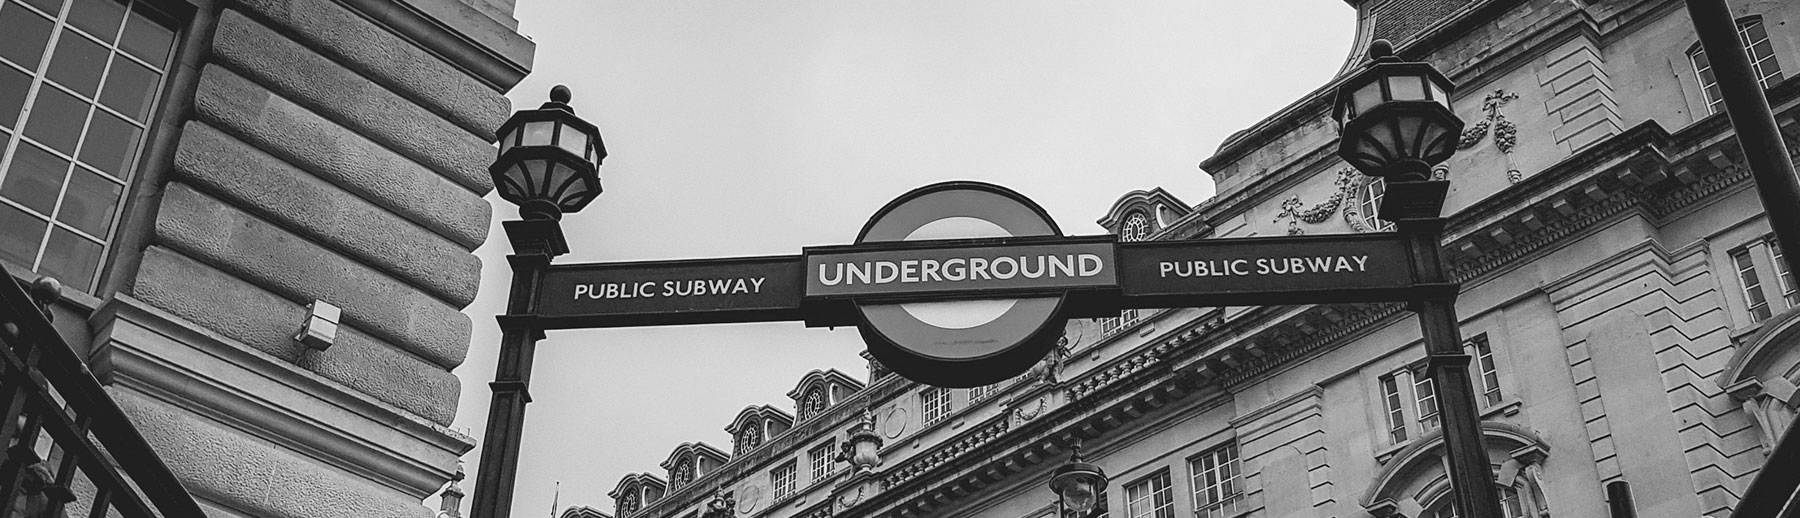 Photo of underground station